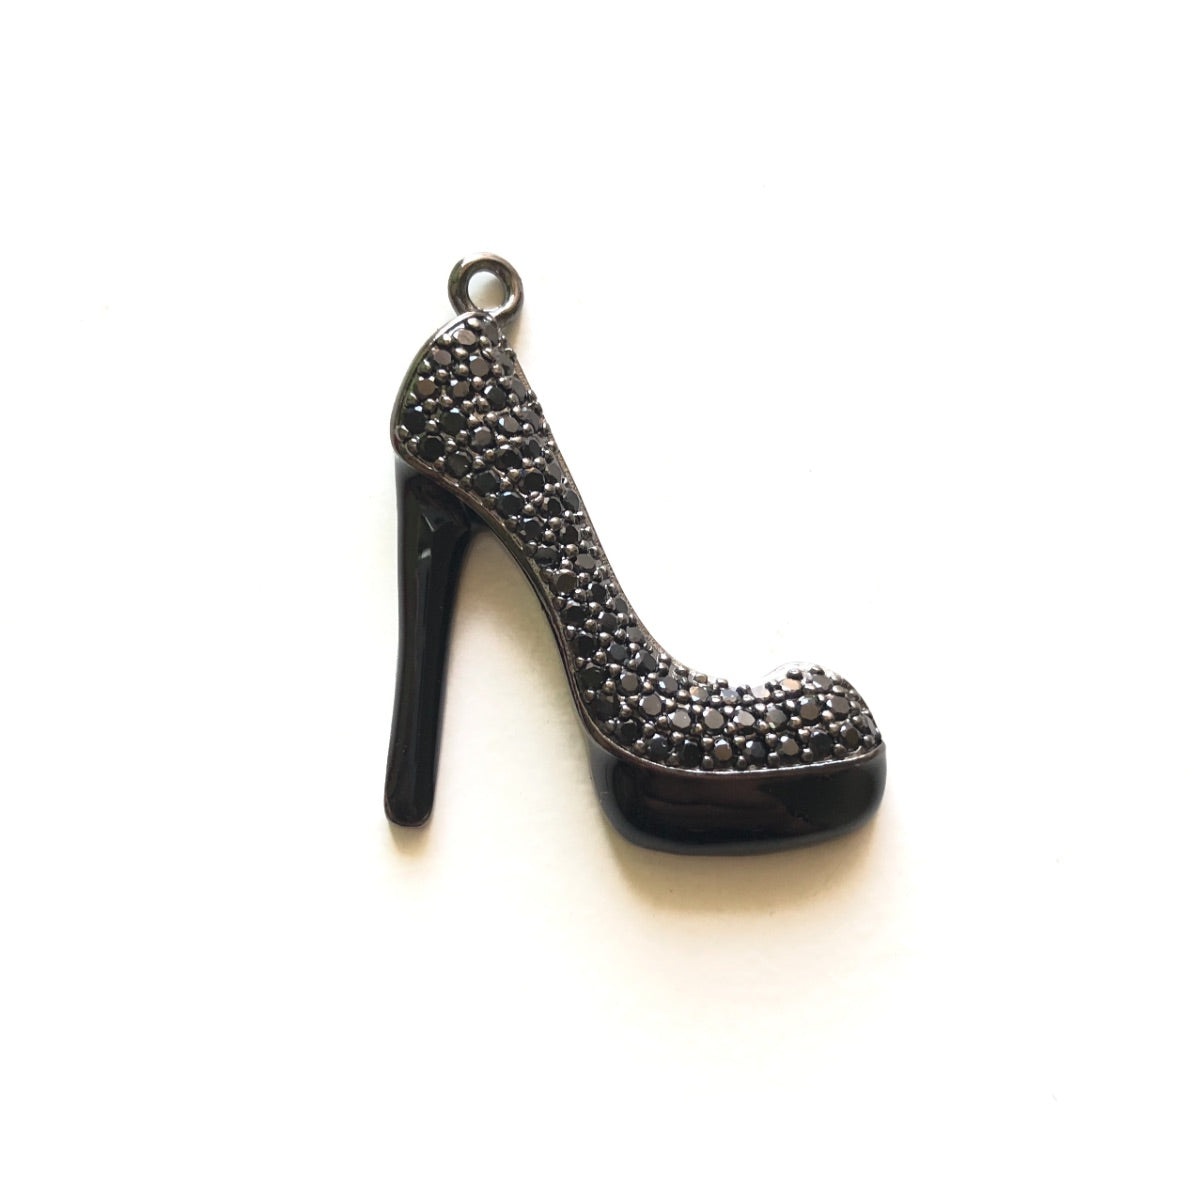 10pcs/lot 27*23mm CZ Paved Black Bottom High Heel Shoe Charms Black CZ Paved Charms High Heels On Sale Charms Beads Beyond